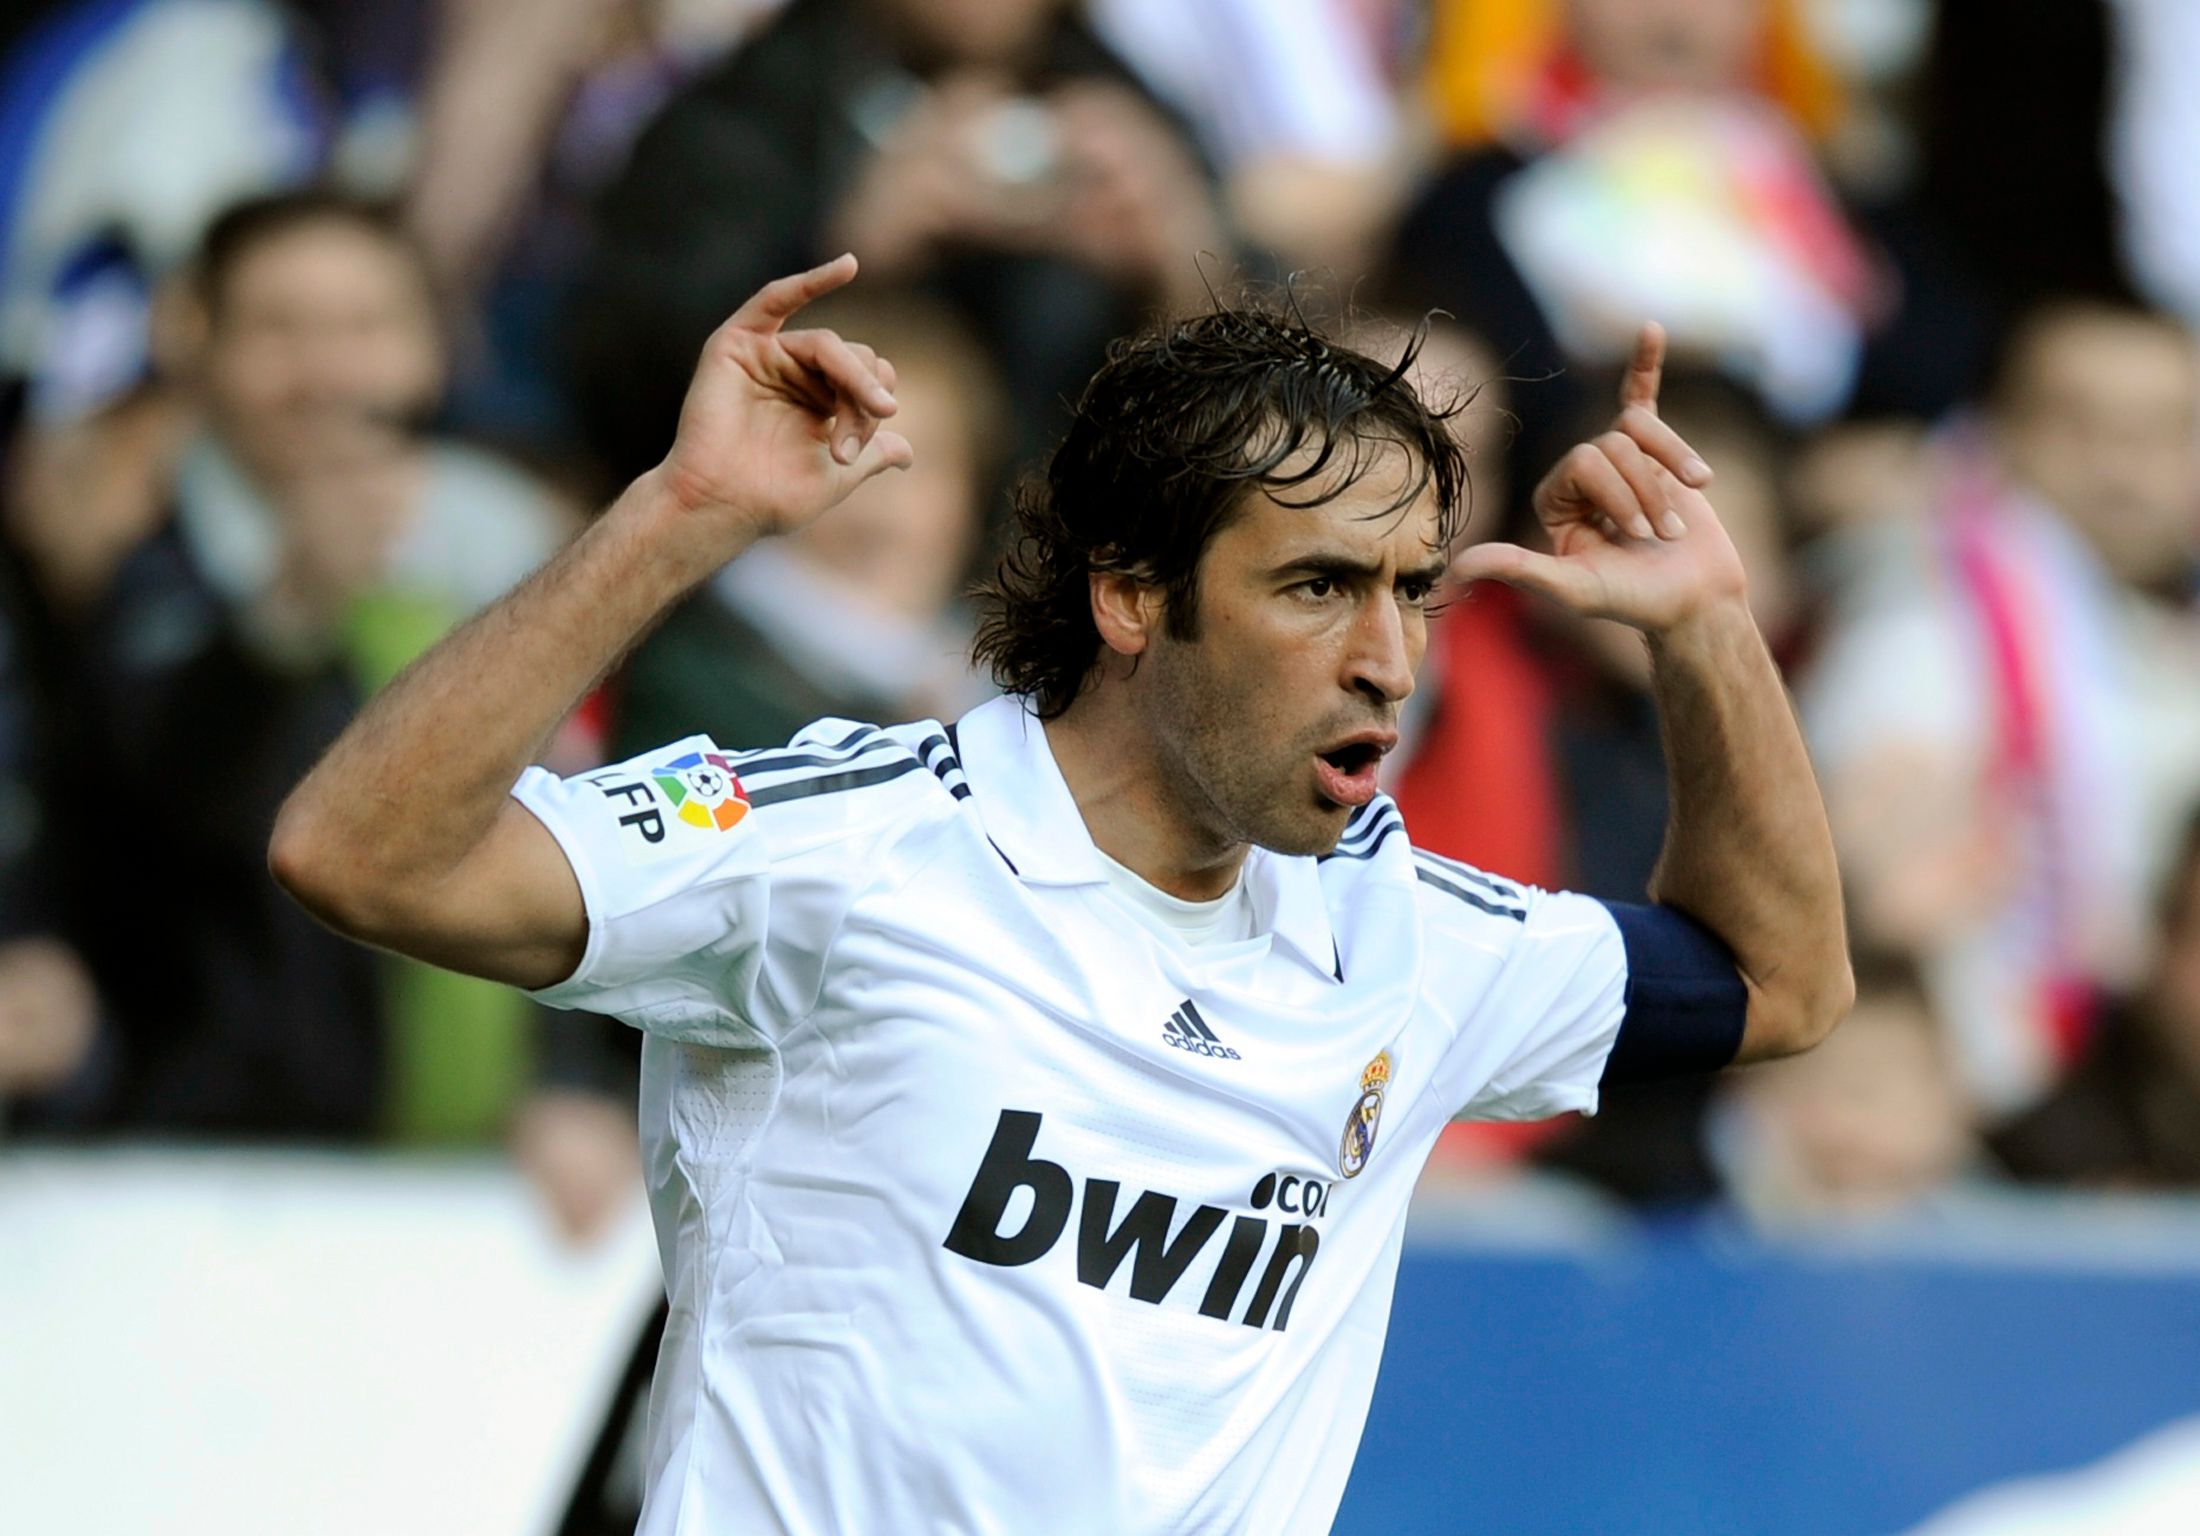 Raul of Real Madrid celebrating scoring a goal